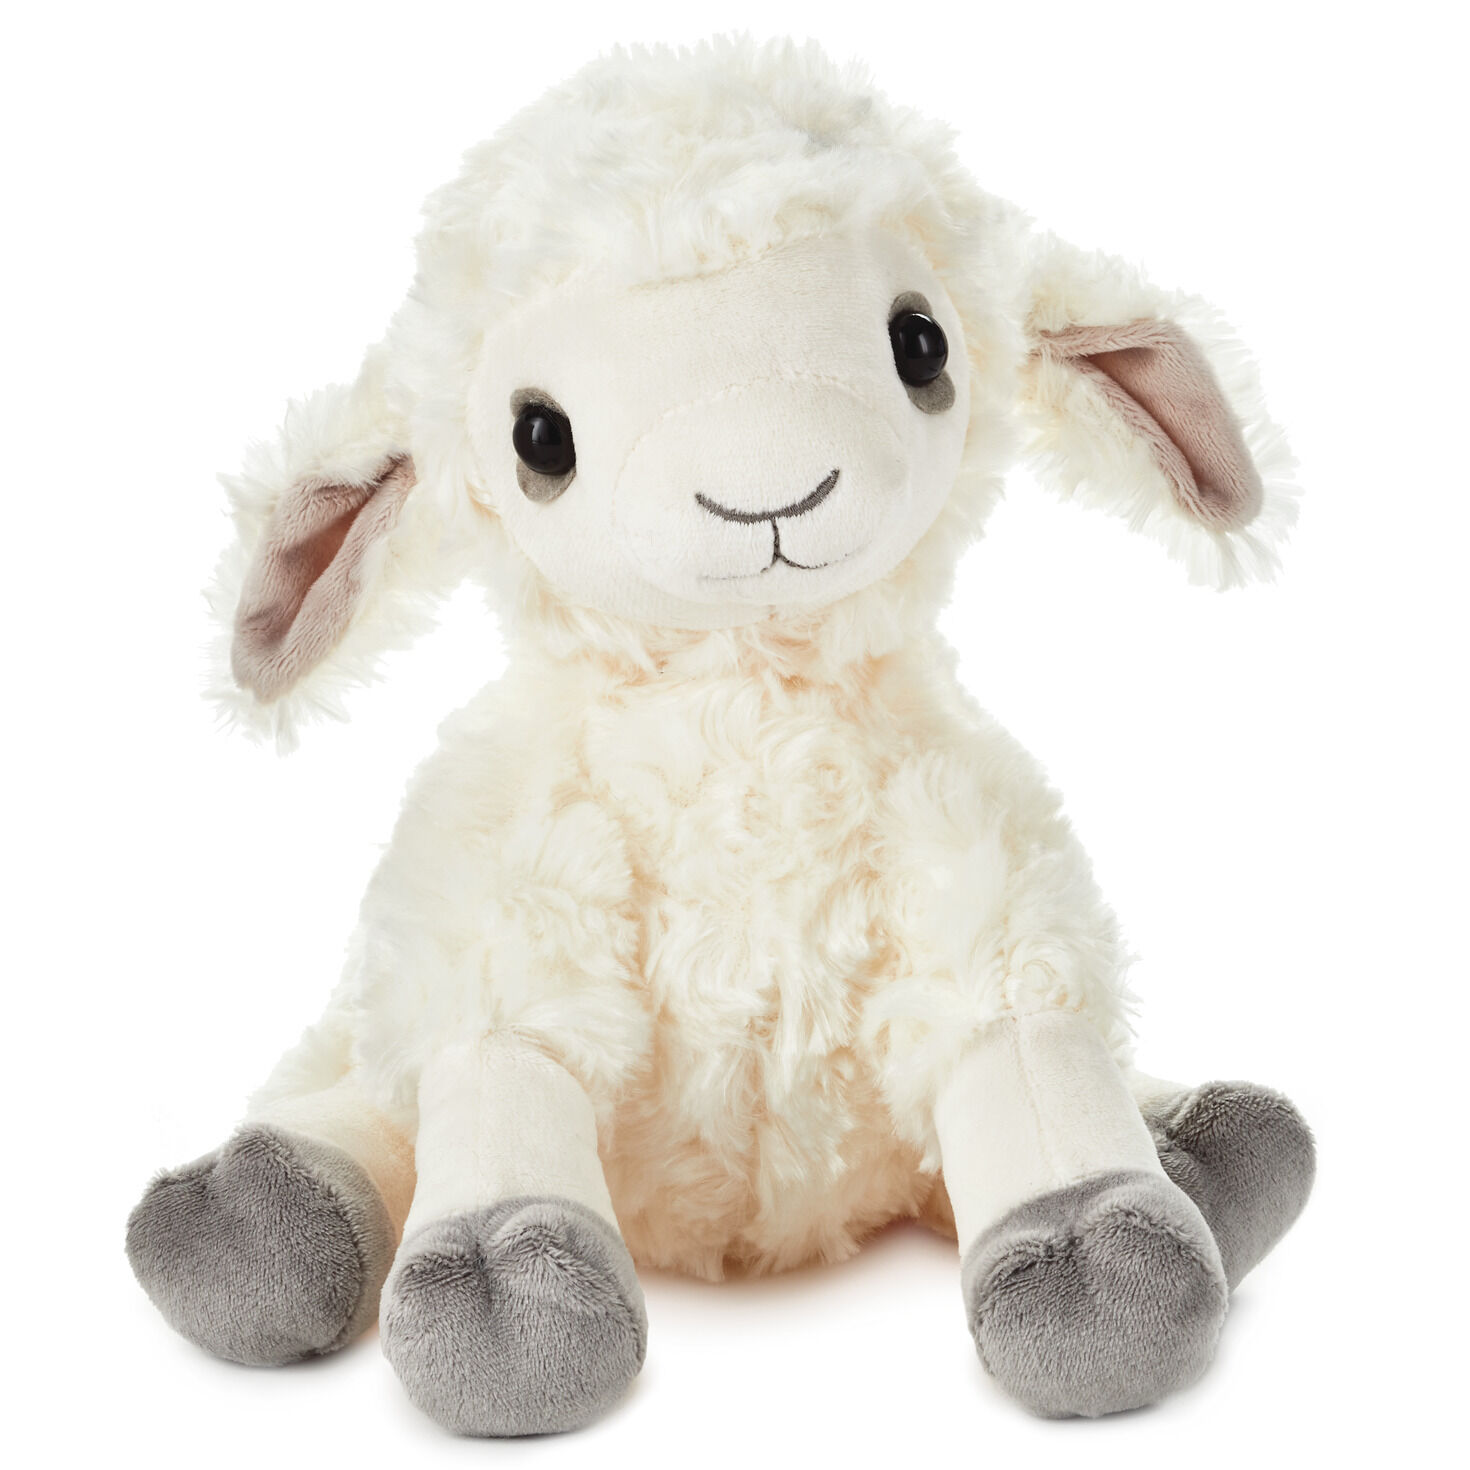 baby lamb stuffed animal